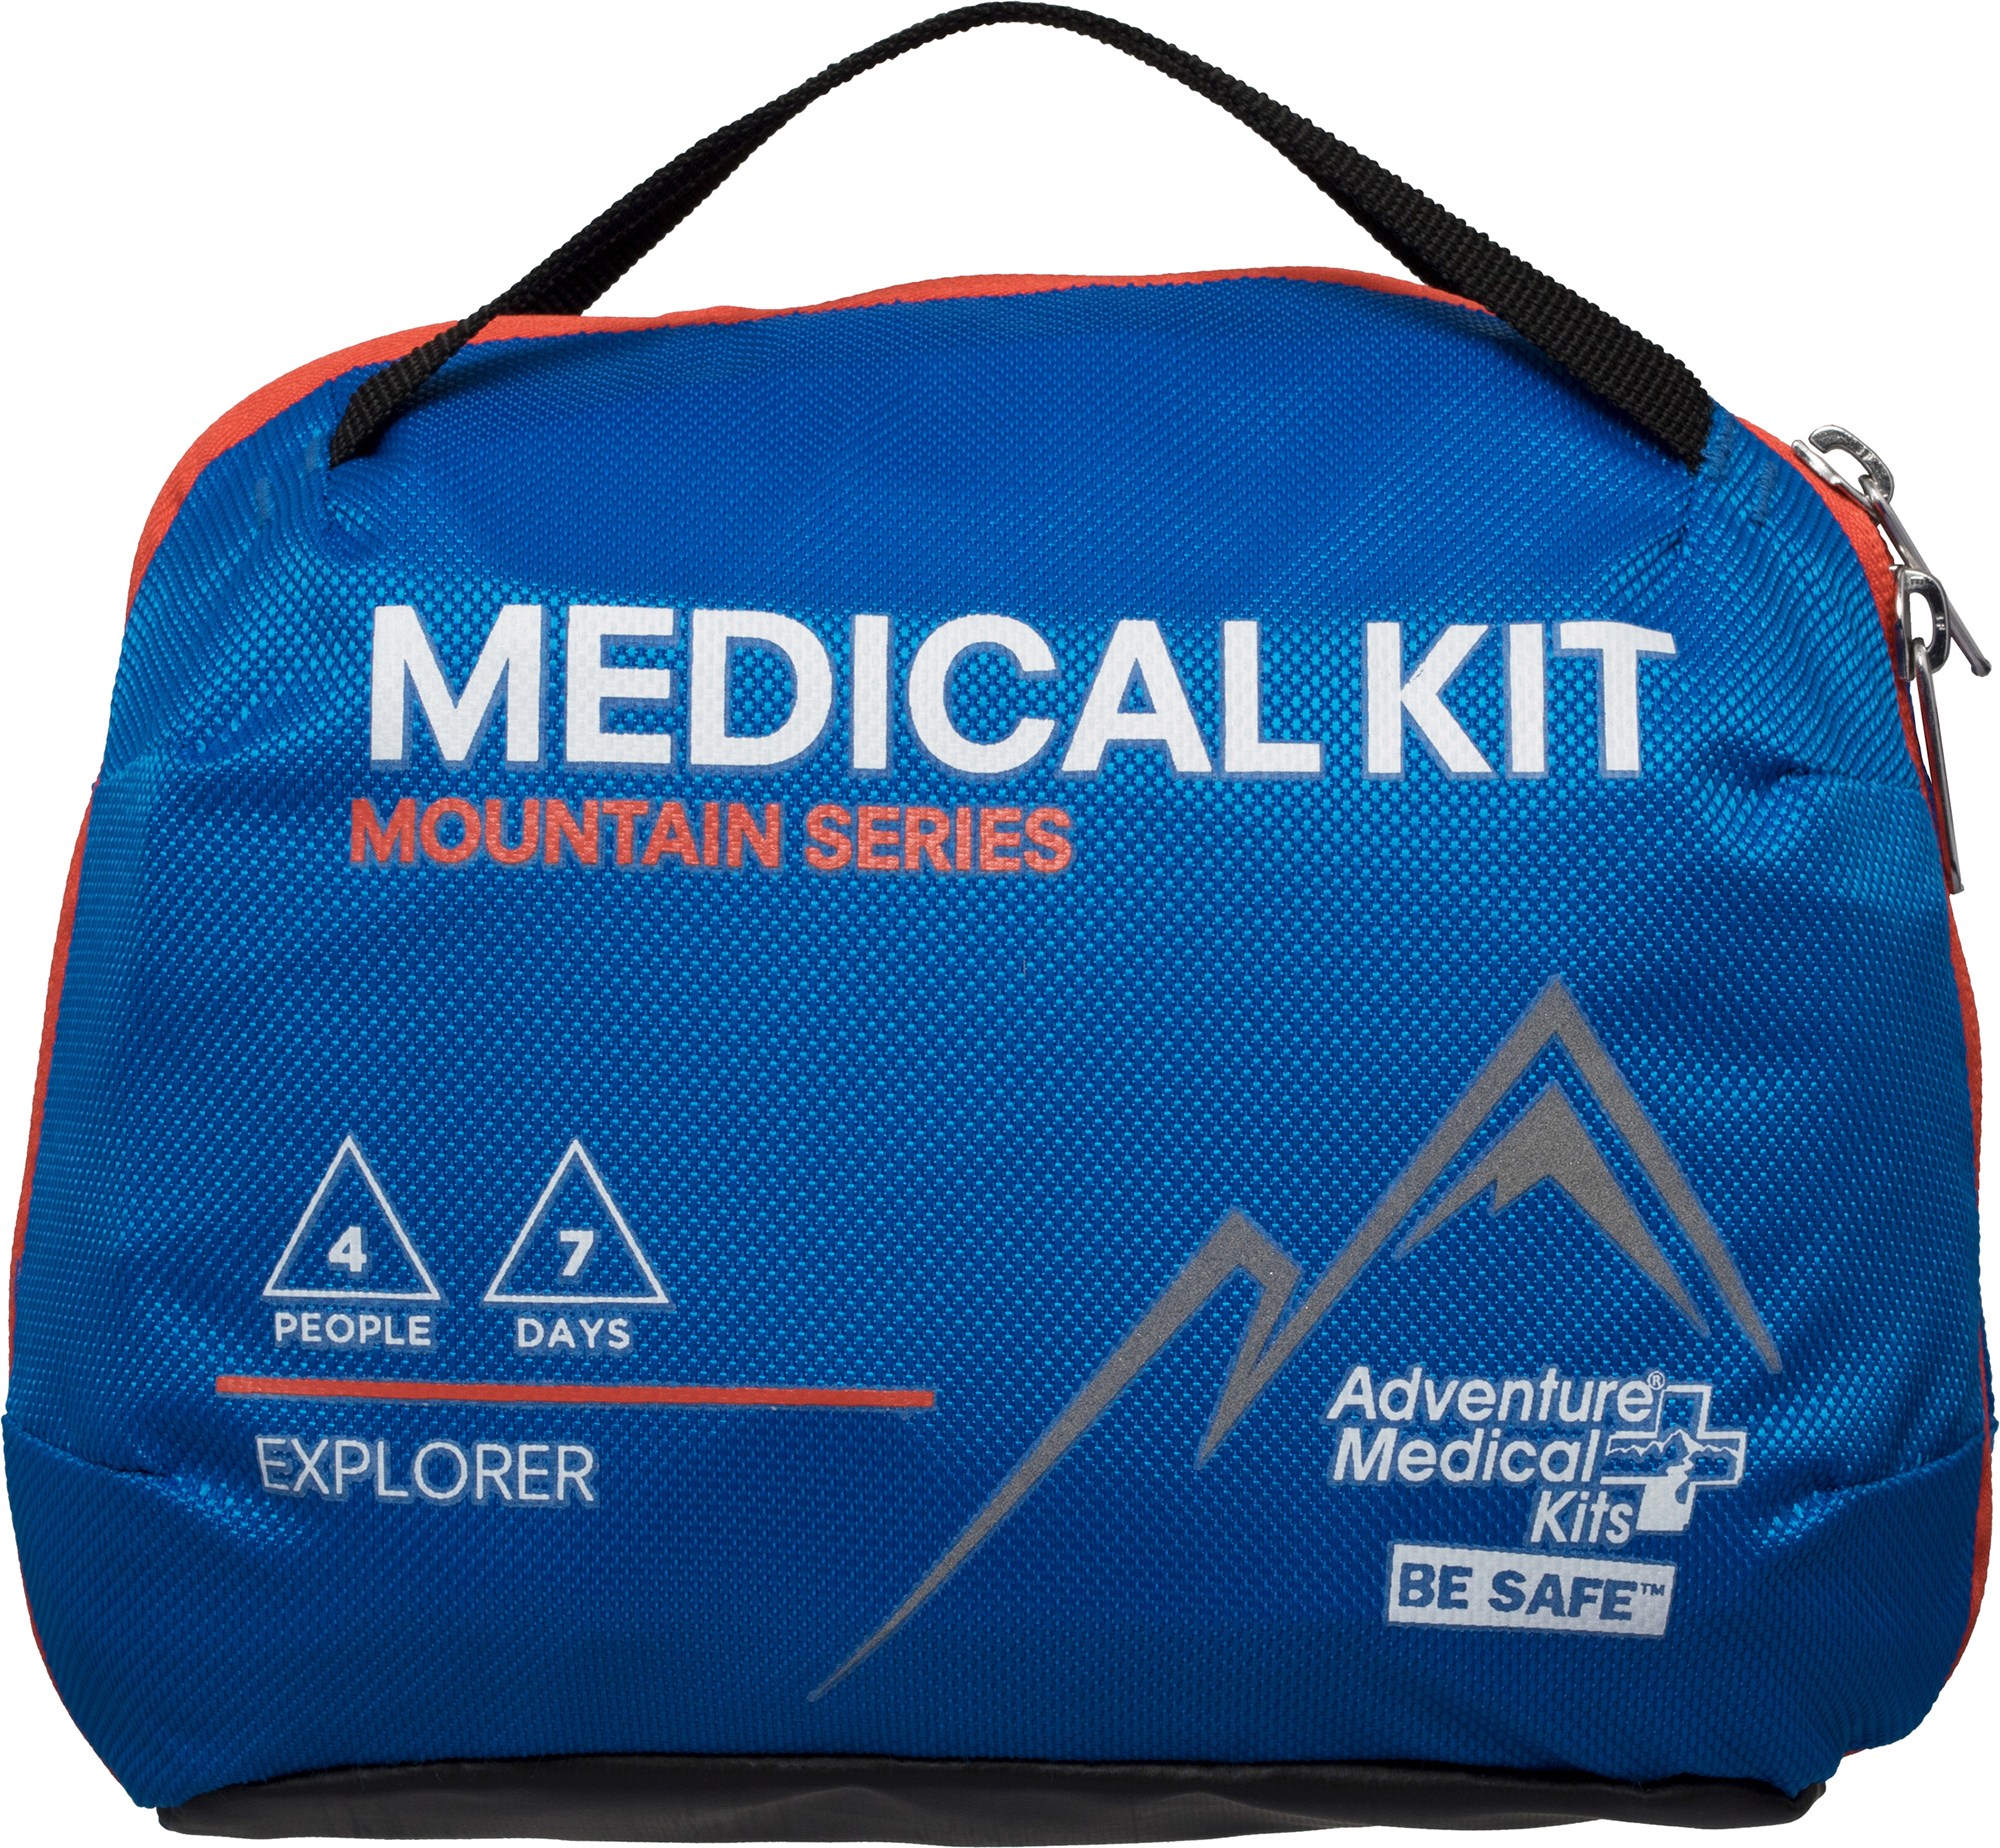 Медицинский набор Mountain Series Explorer Adventure Medical Kits, синий quikclot trauma pack pro жгут quikclot adventure medical kits цвет one color